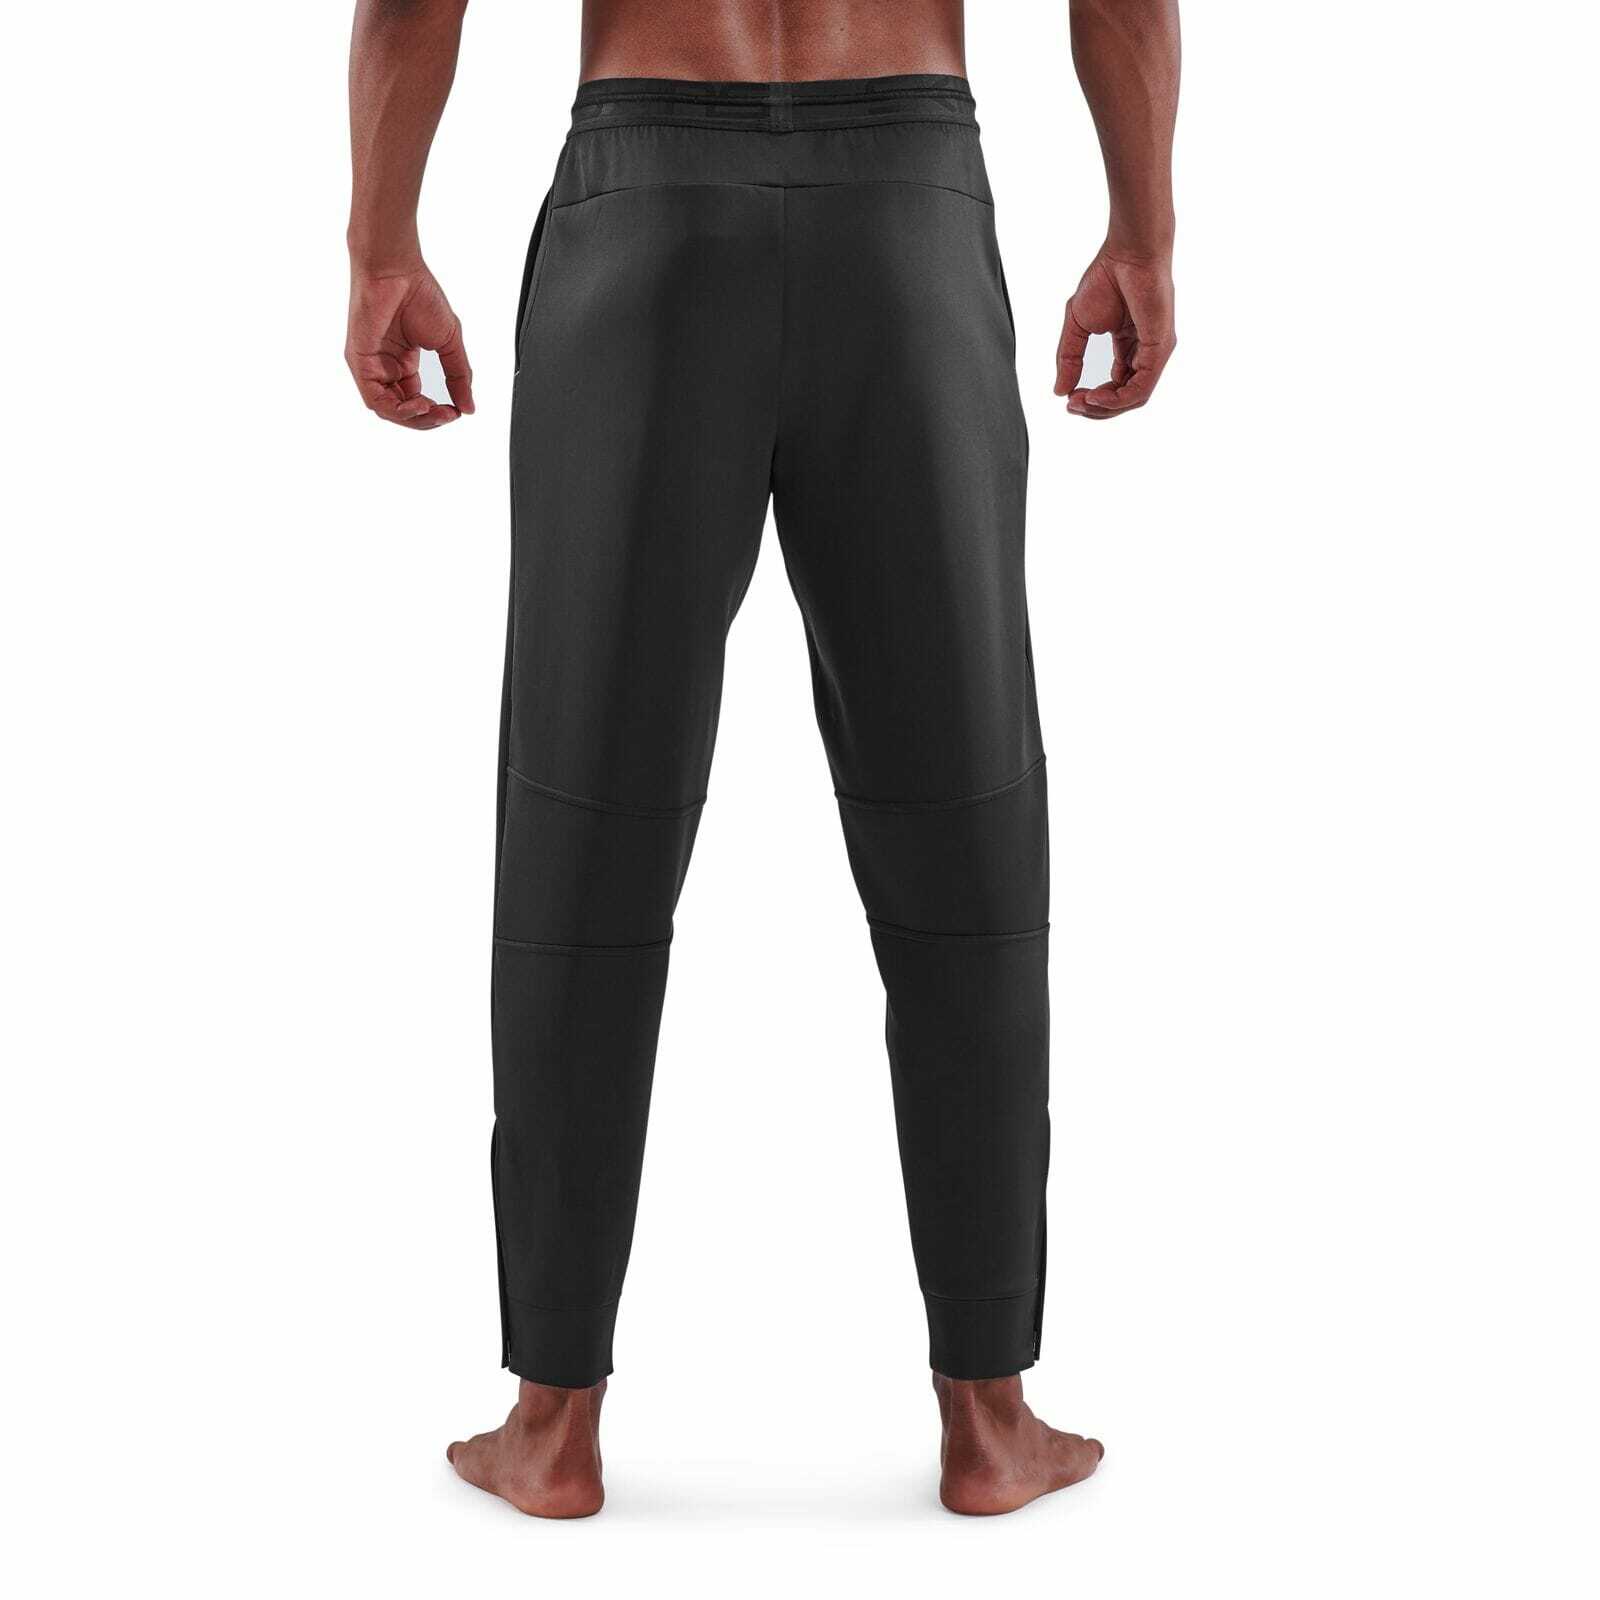 SKINS SERIES-3 Men's Warm Up Pants Black